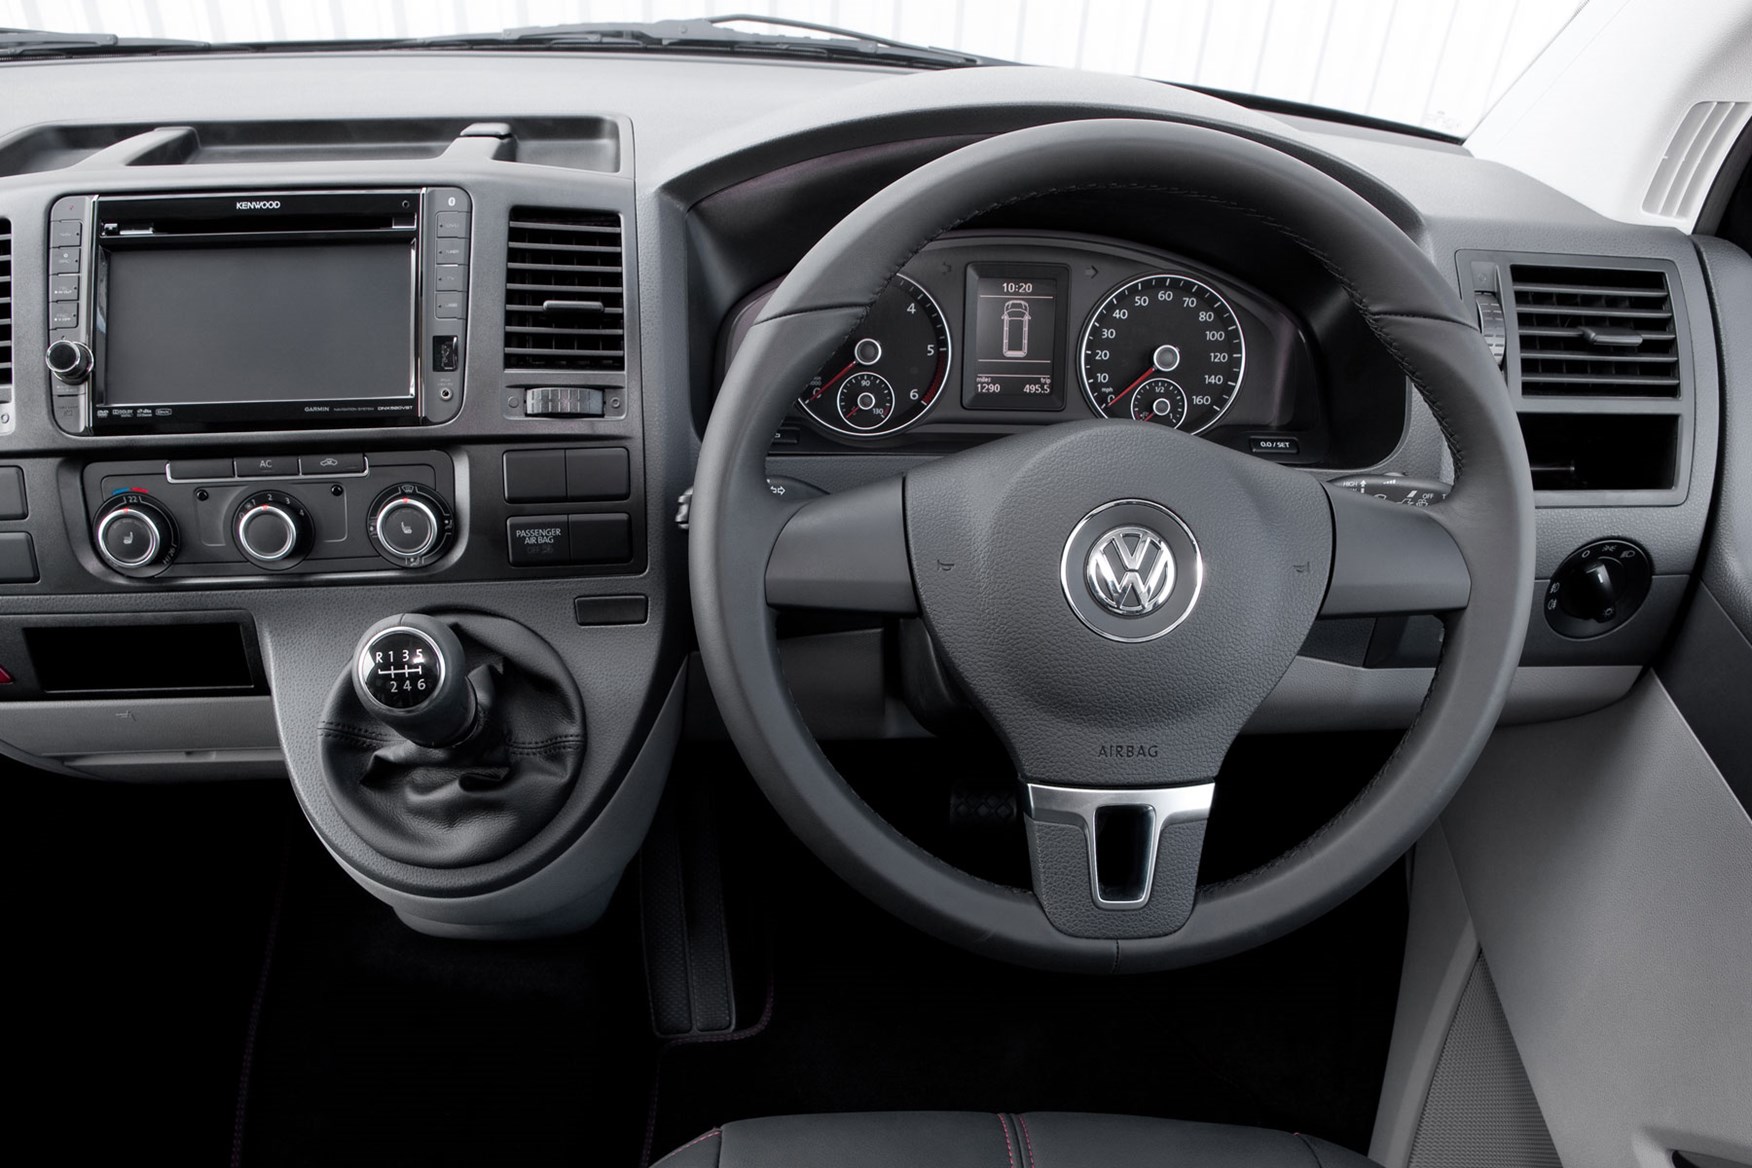 2010 Volkswagen Transporter, Multivan & Caravelle Review - Drive